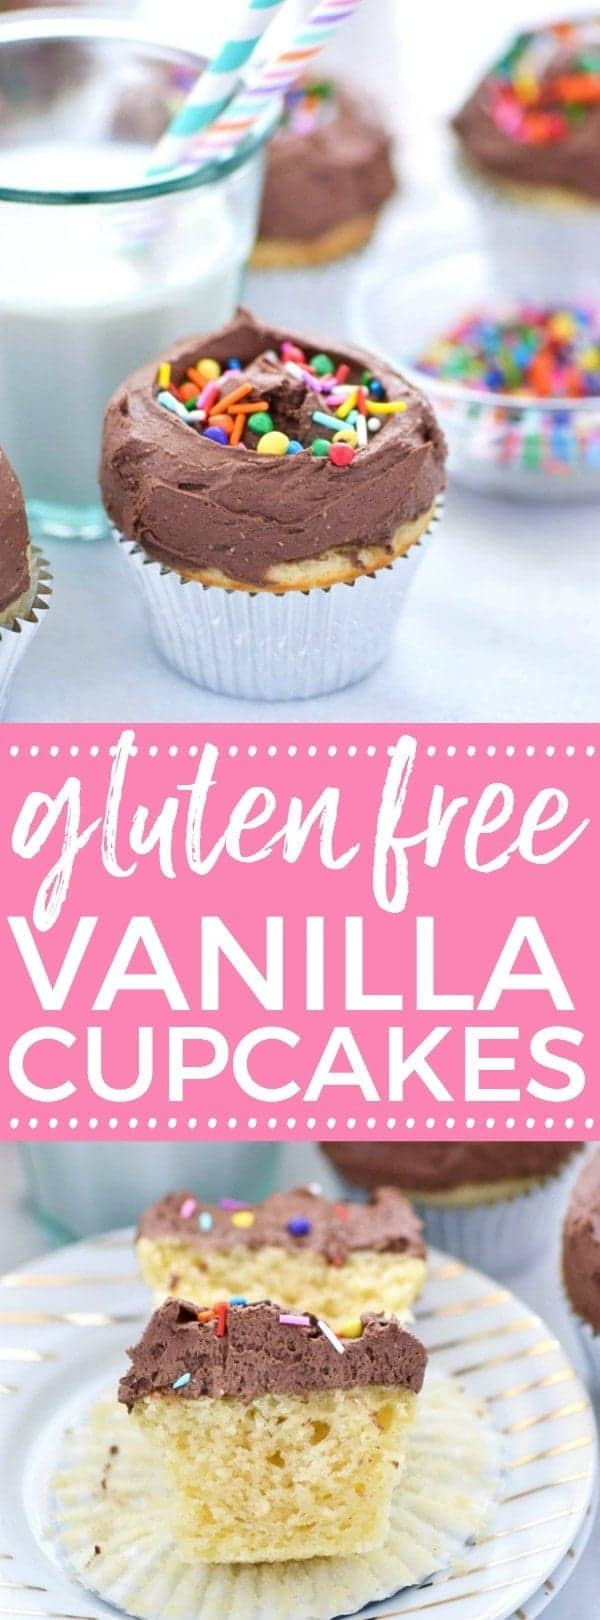 Gourmet Super Moist Vanilla Cupcakes Recipes
 Gluten Free Vanilla Sour Cream Cupcakes